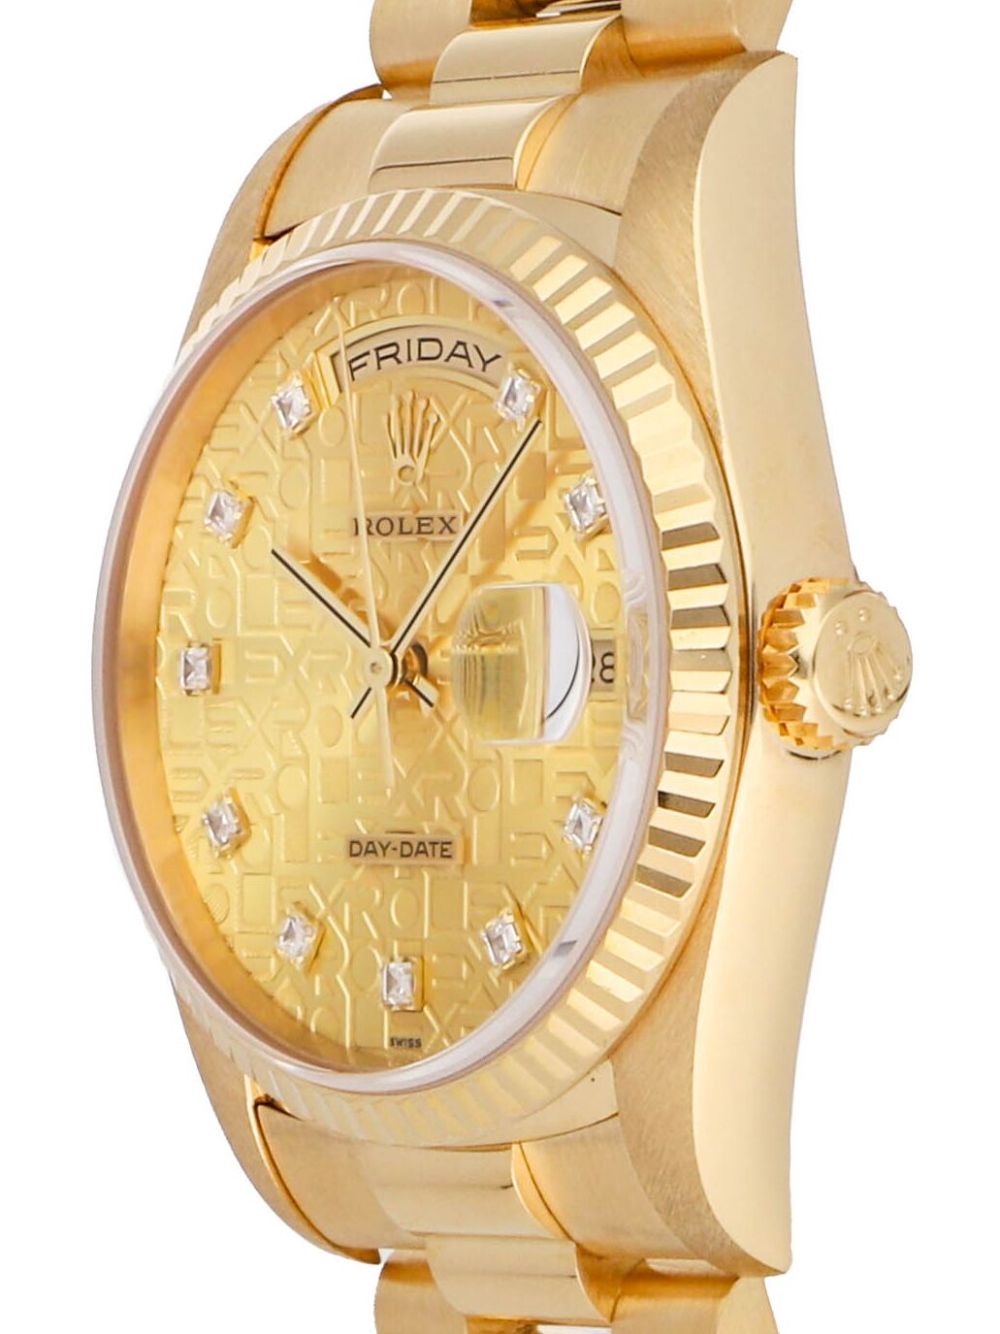 Rolex 2012 pre-owned Day-Date horloge - Goud